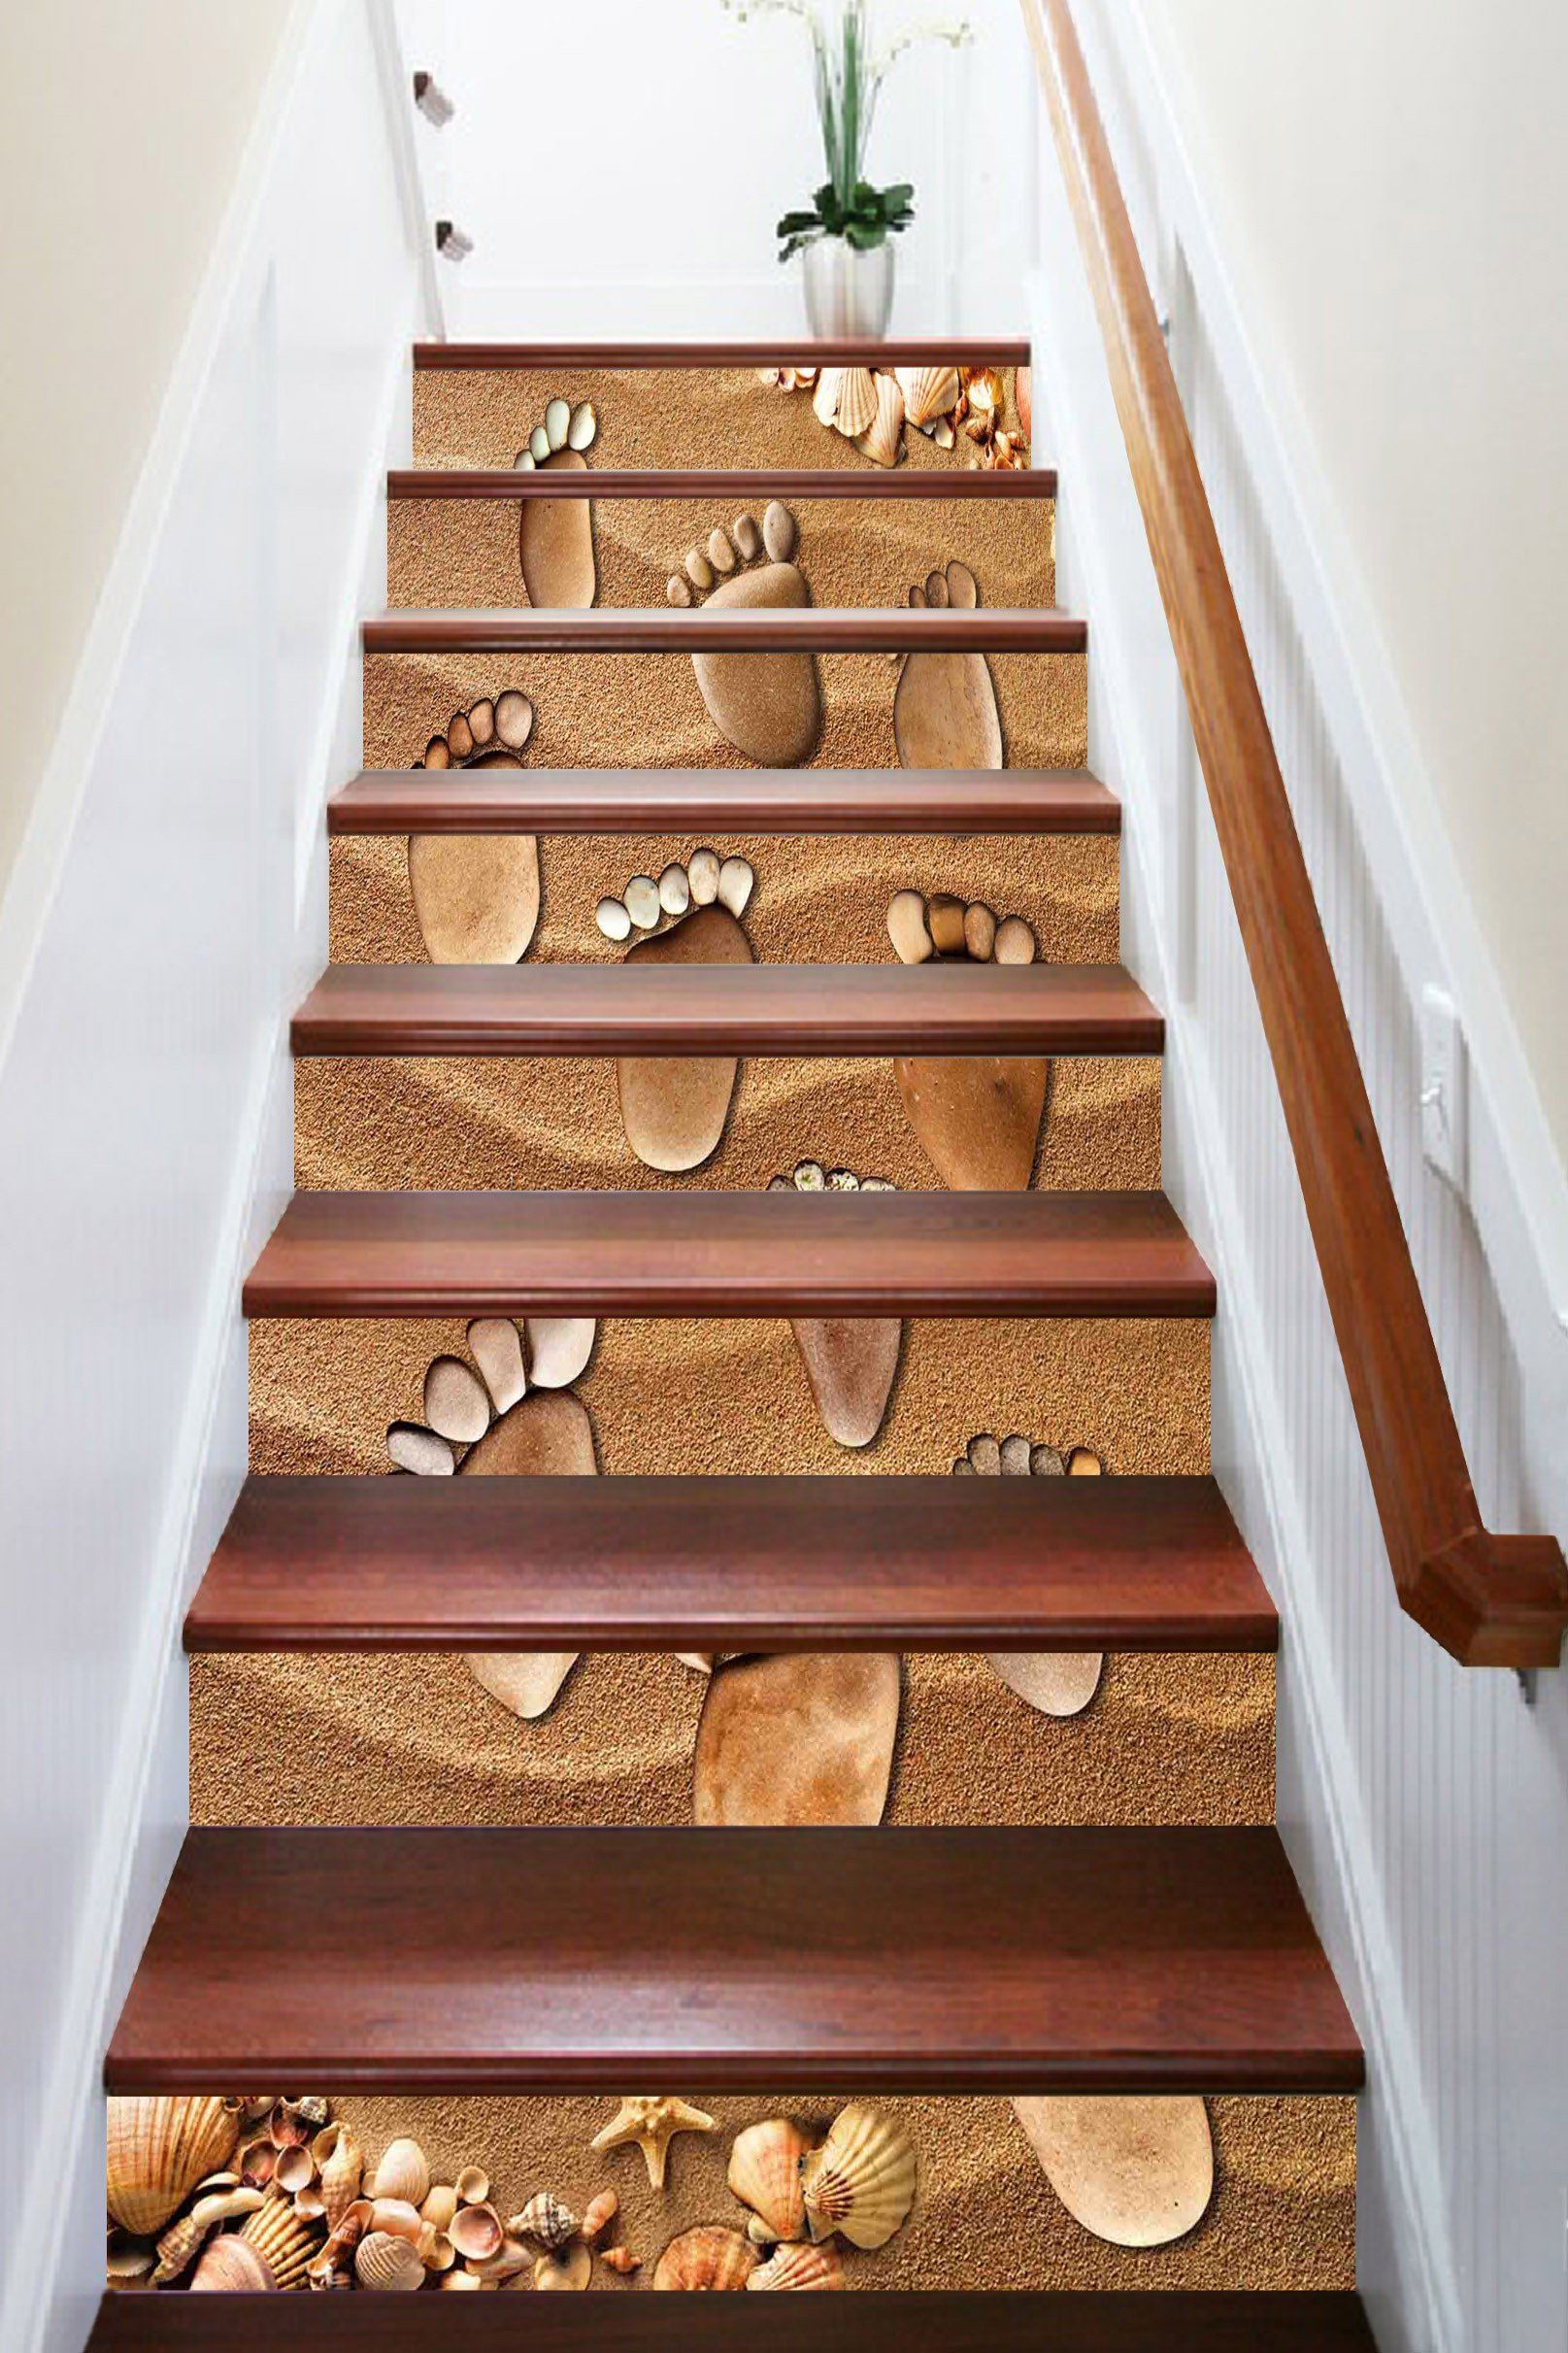 3D Sandy Beach Footprints 1488 Stair Risers Wallpaper AJ Wallpaper 